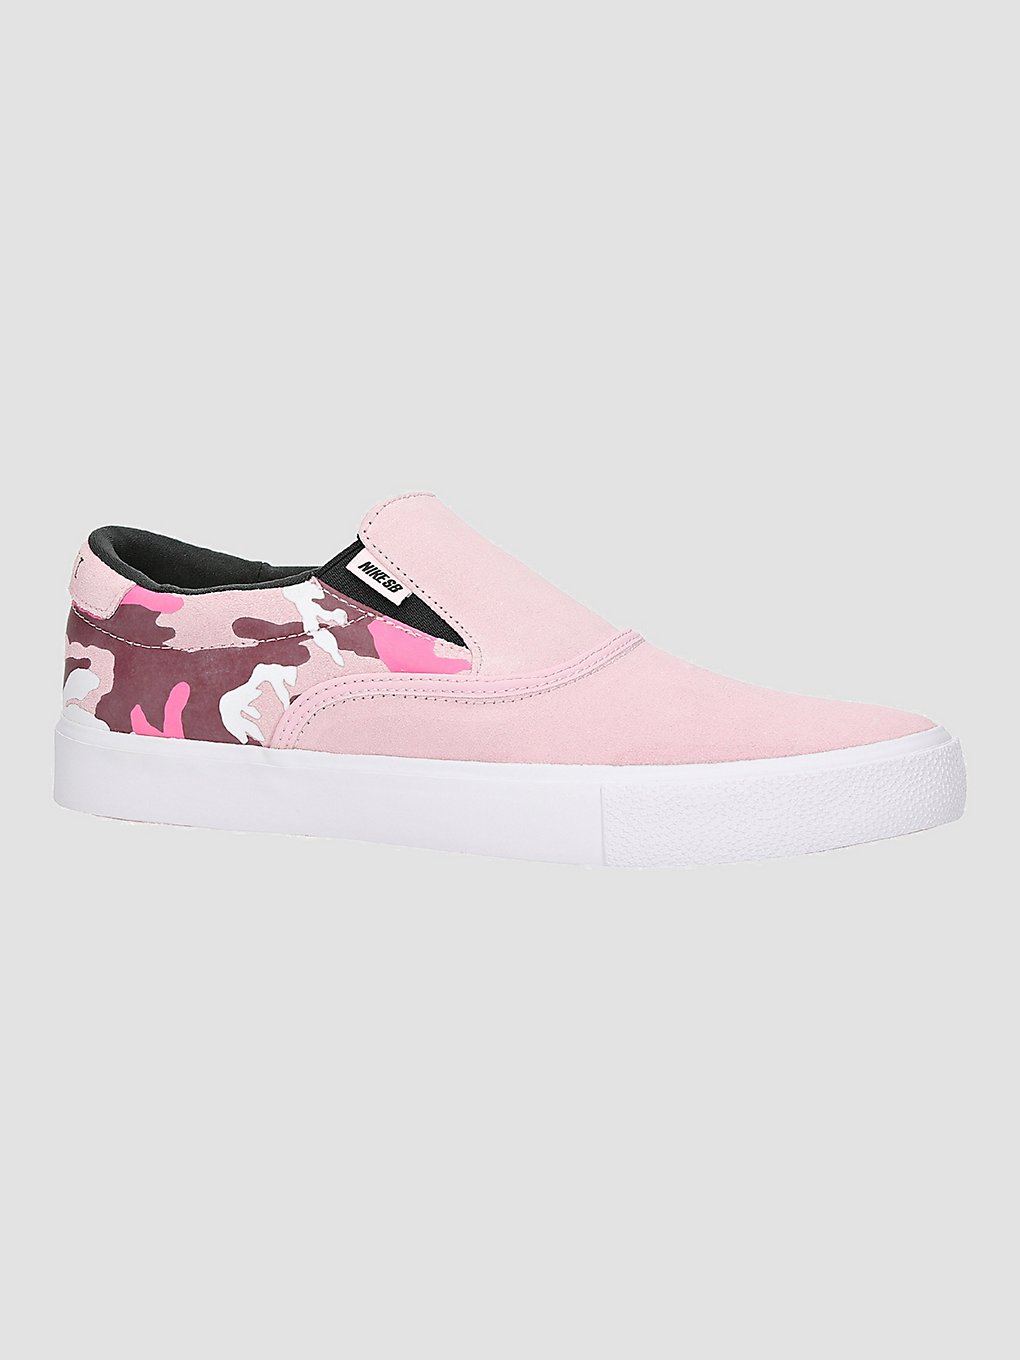 Nike SB Zoom Verona Slip LB Skate Shoes rosa